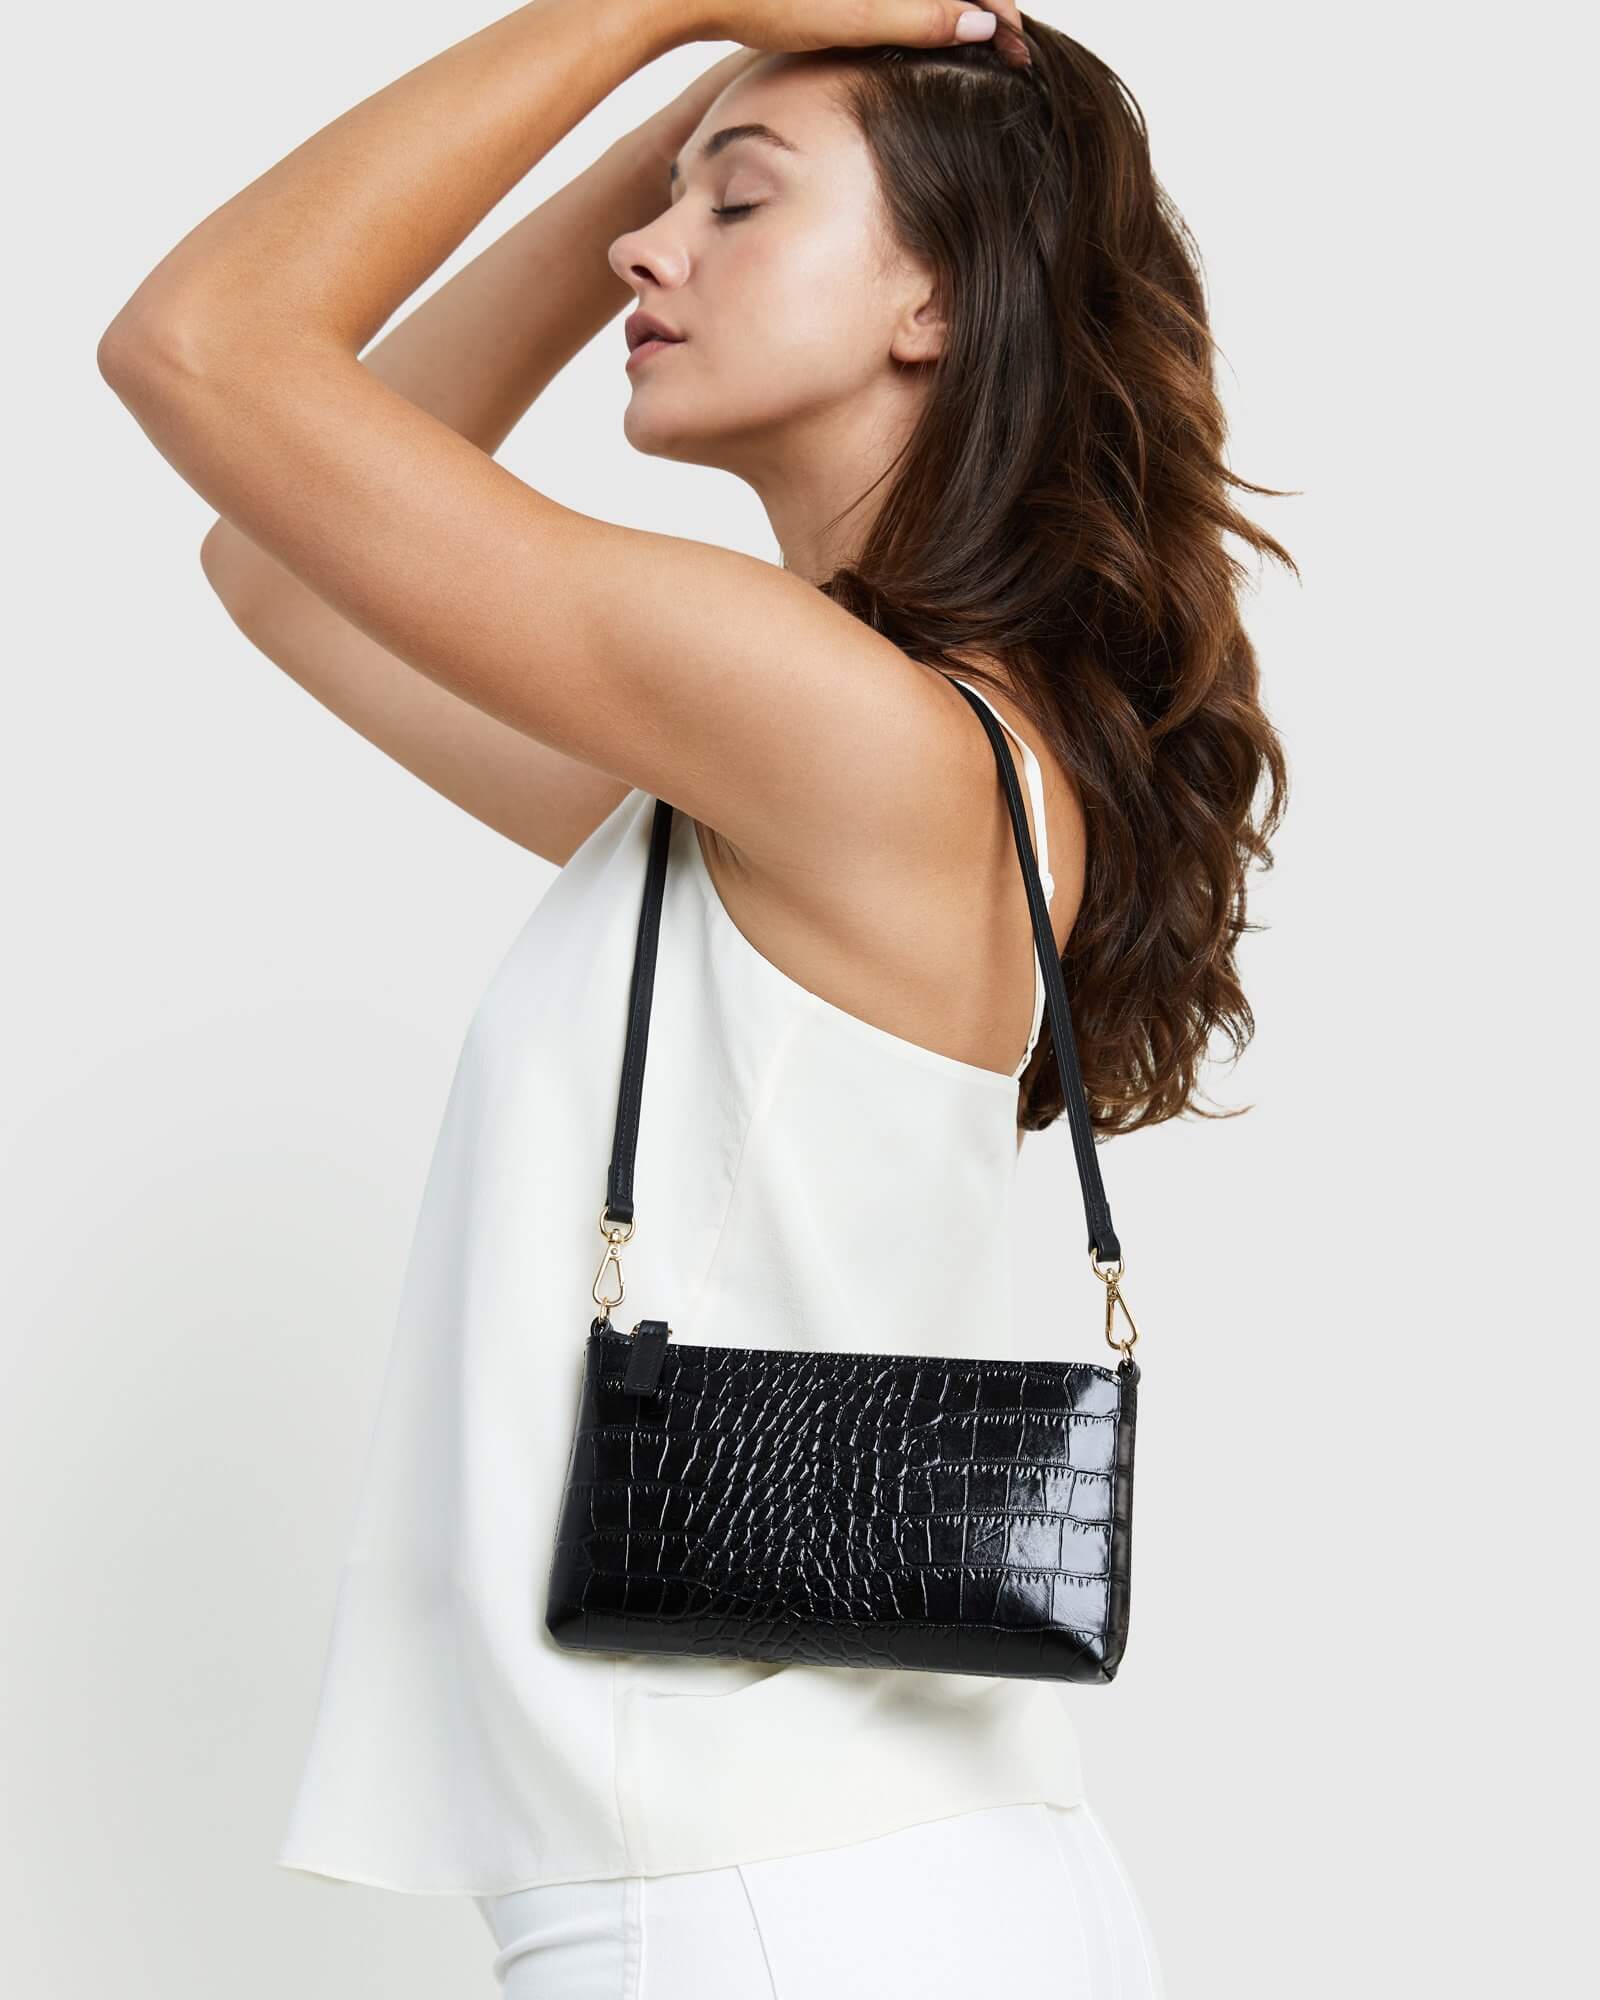 Croco Leather Shoulder Bag by Last Brand - $55